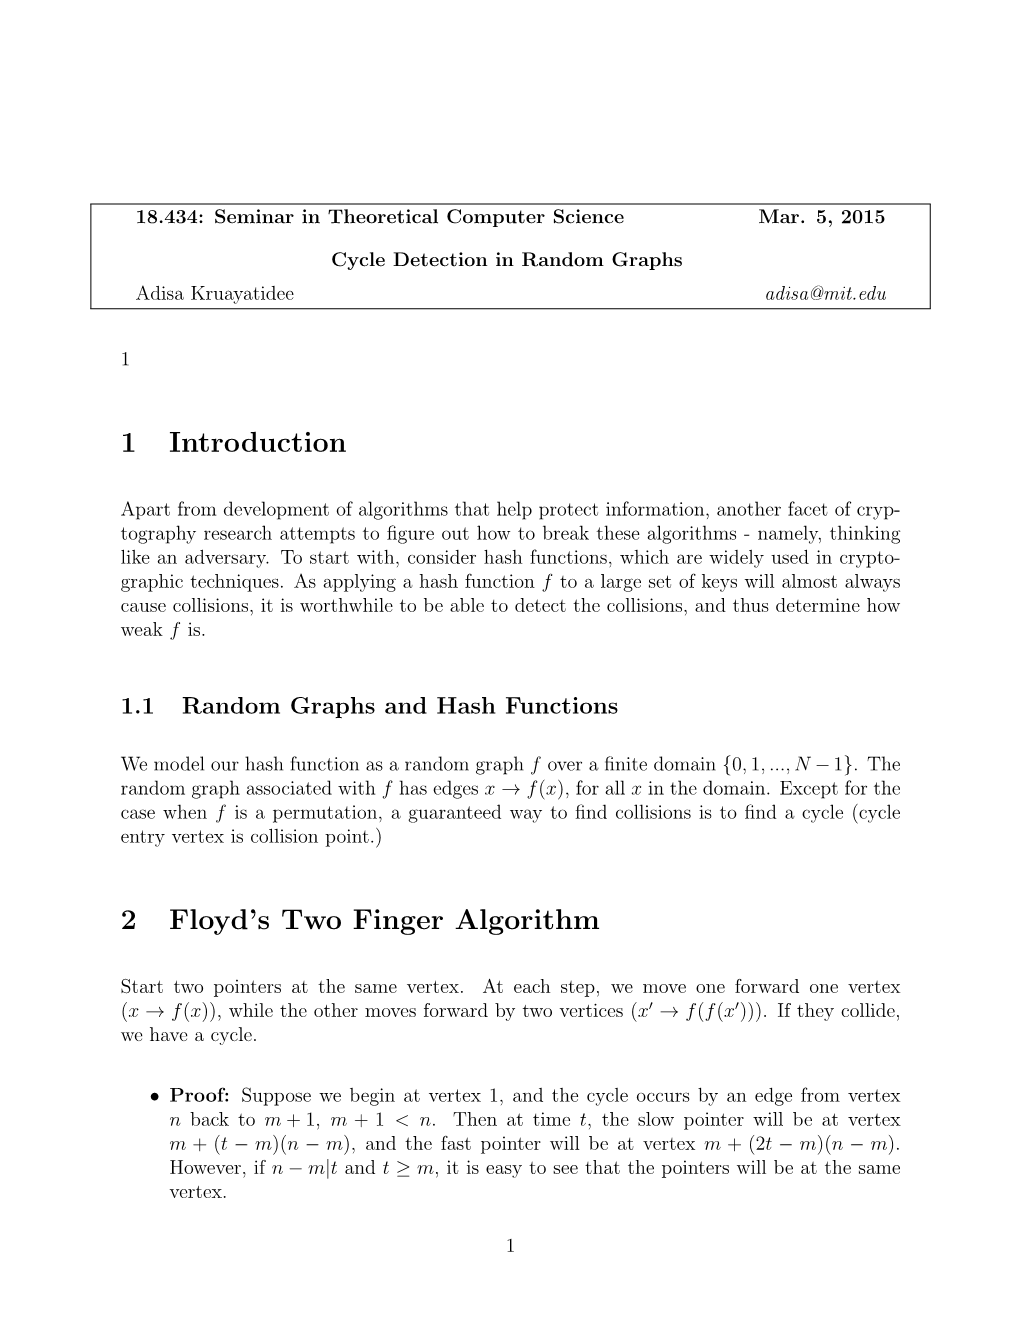 1 Introduction 2 Floyd's Two Finger Algorithm